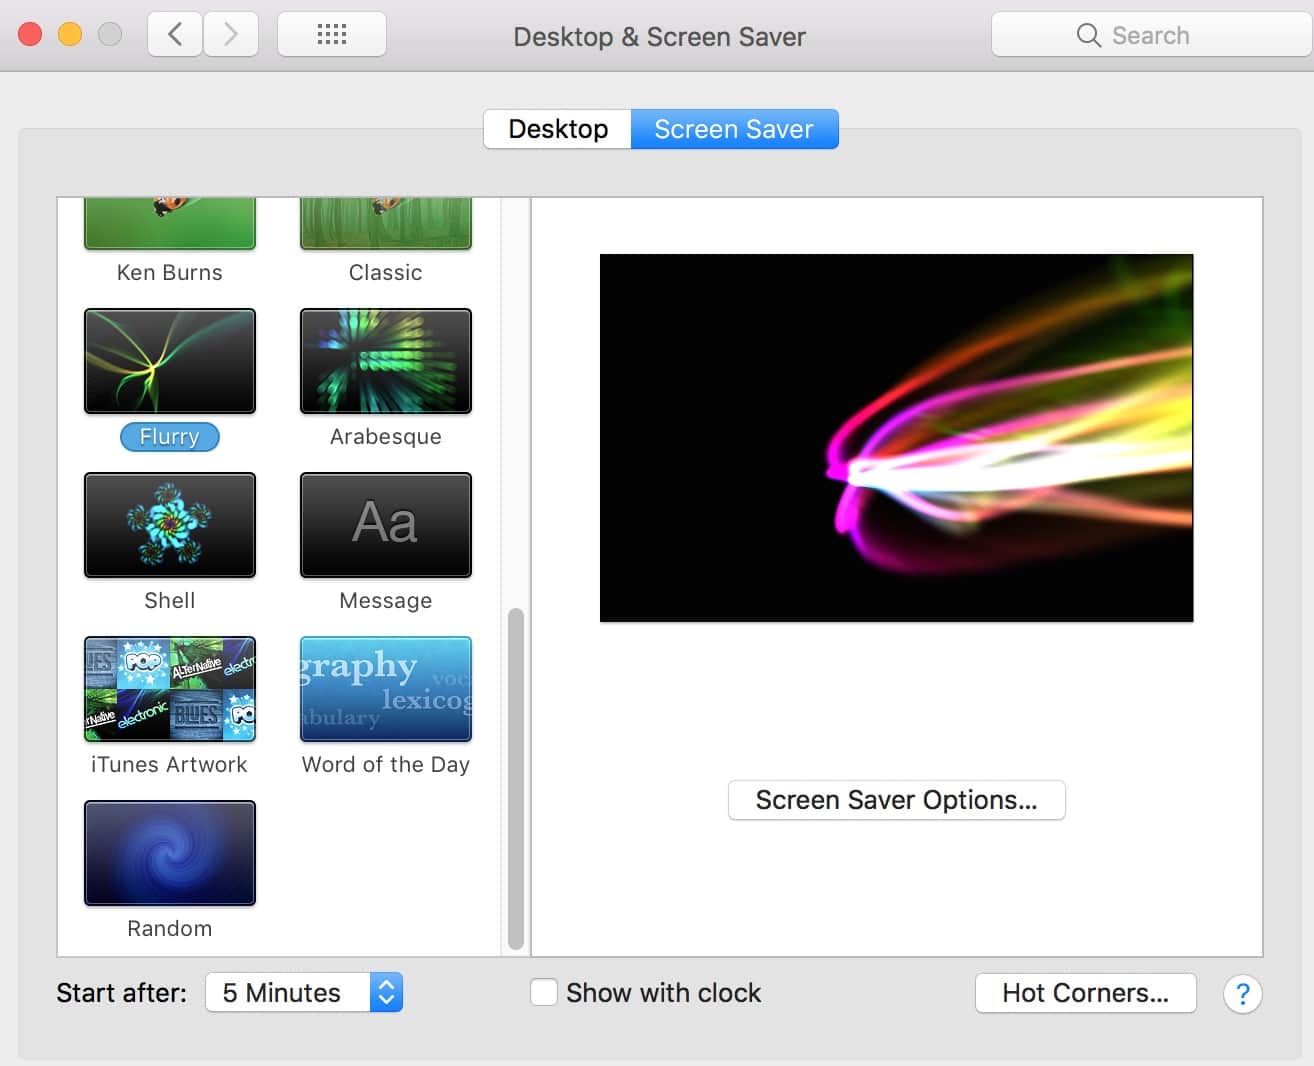 Desktop & Screen Saver Preferences showing macOS screensavers